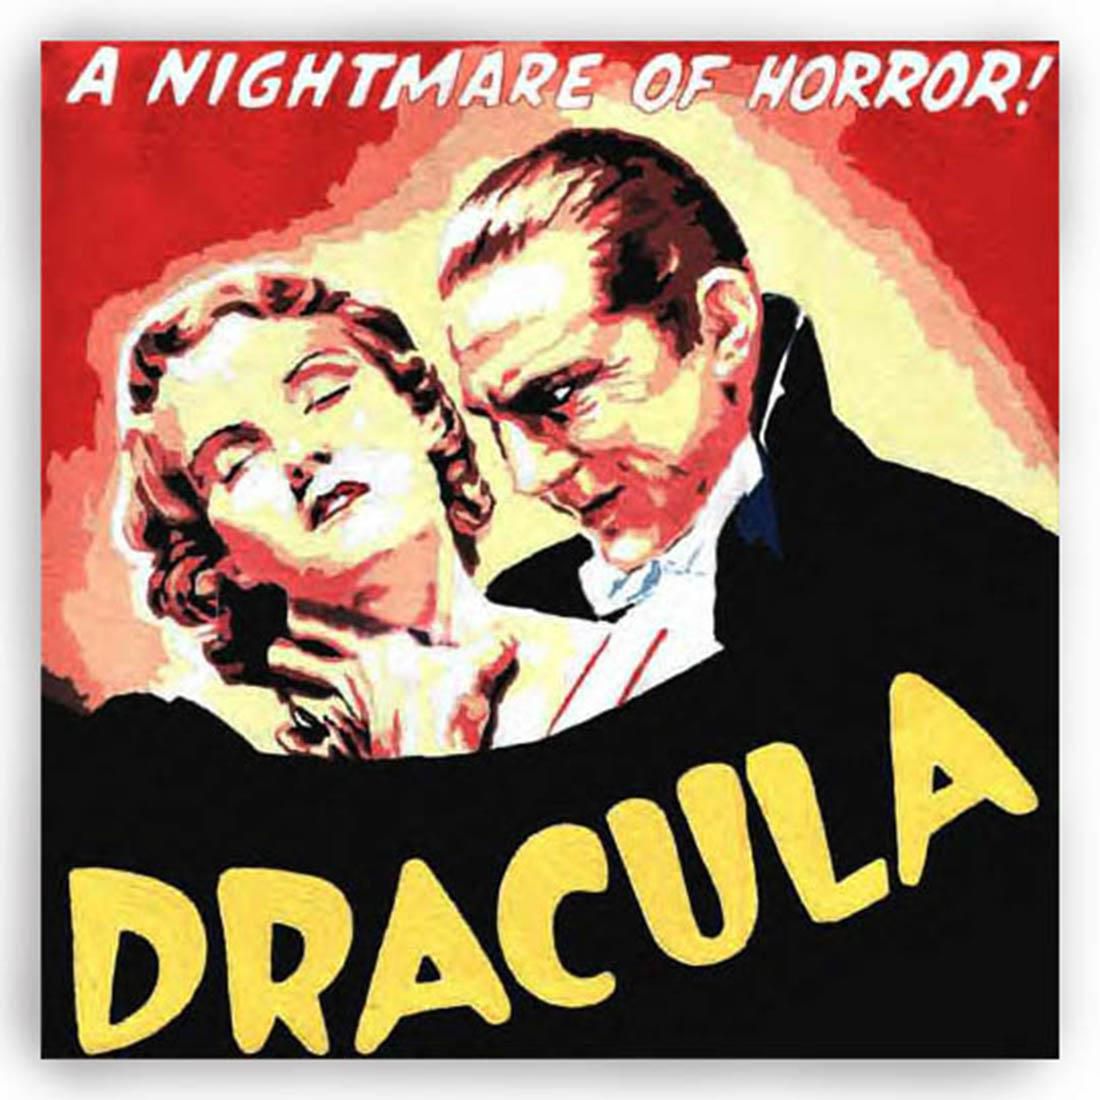 Classic Vampire Quotes from Bram Stoker s "Dracula"